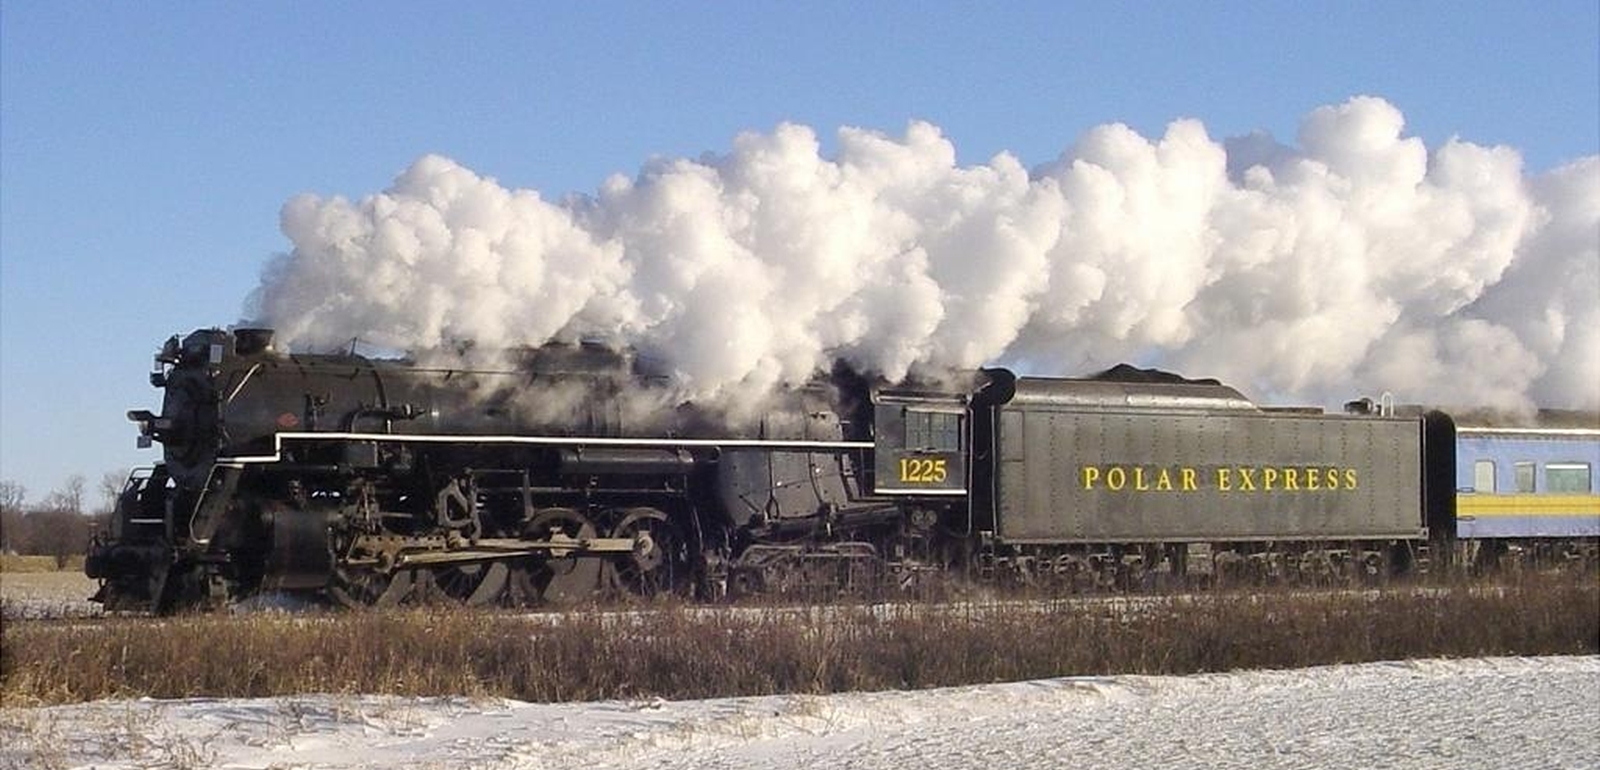 No. 1225 marked “Polar Express” in December 2004 in Henderson, Michigan